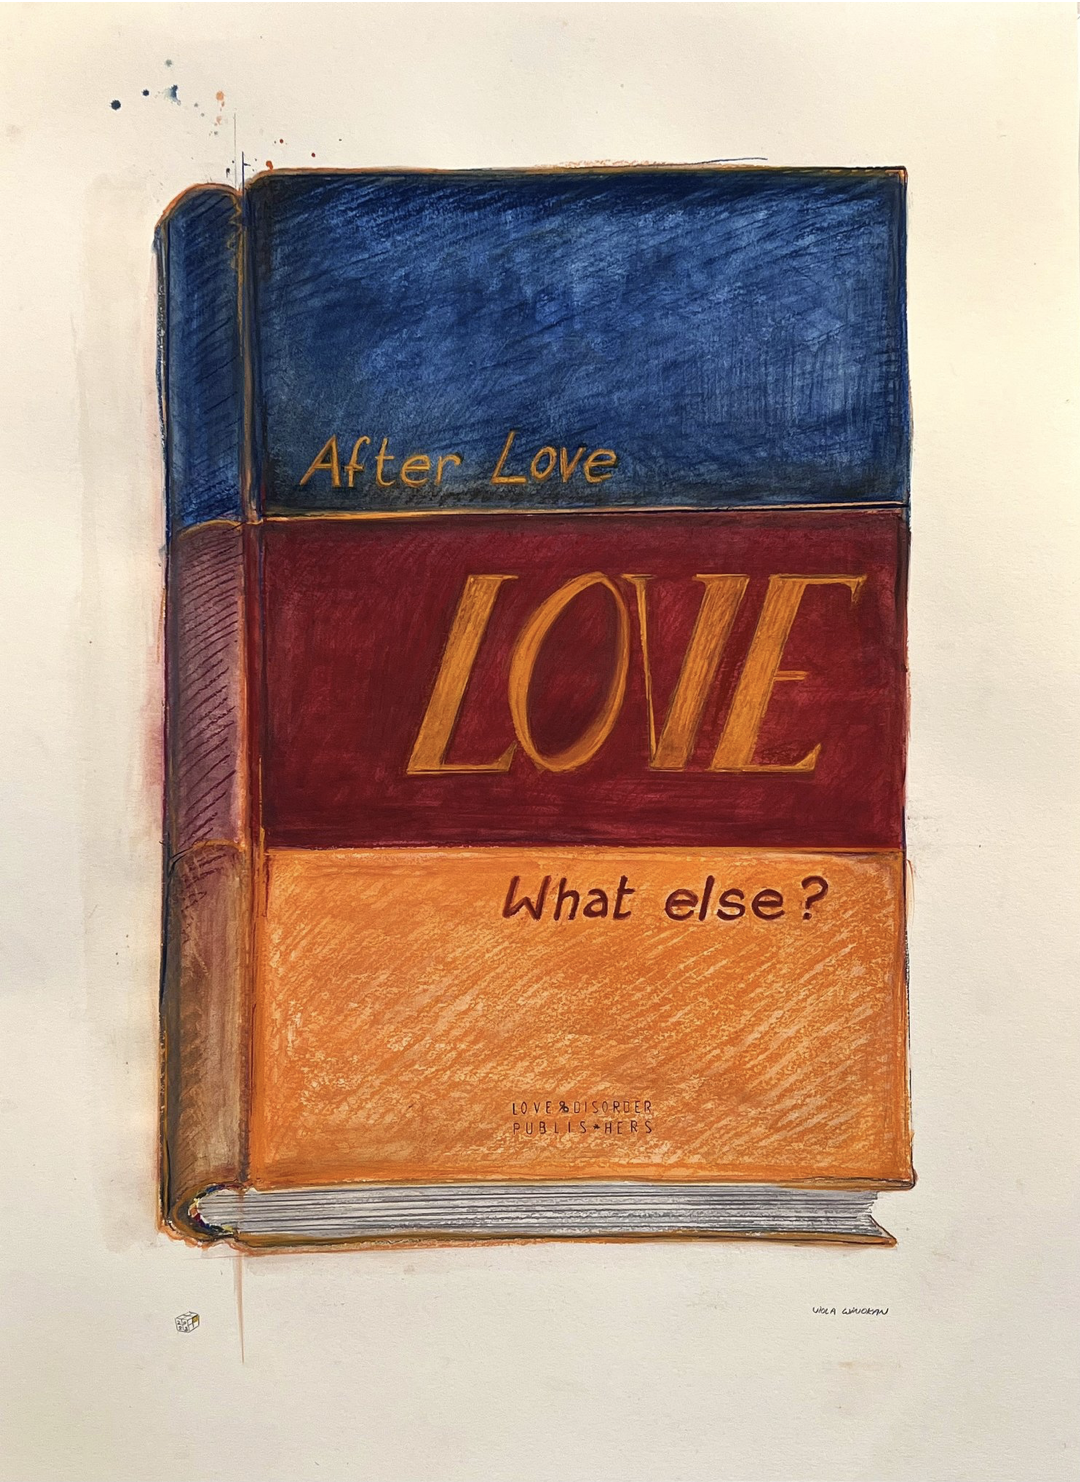 After Love, Love - What Else? ▫️VIOLA WINOKAN